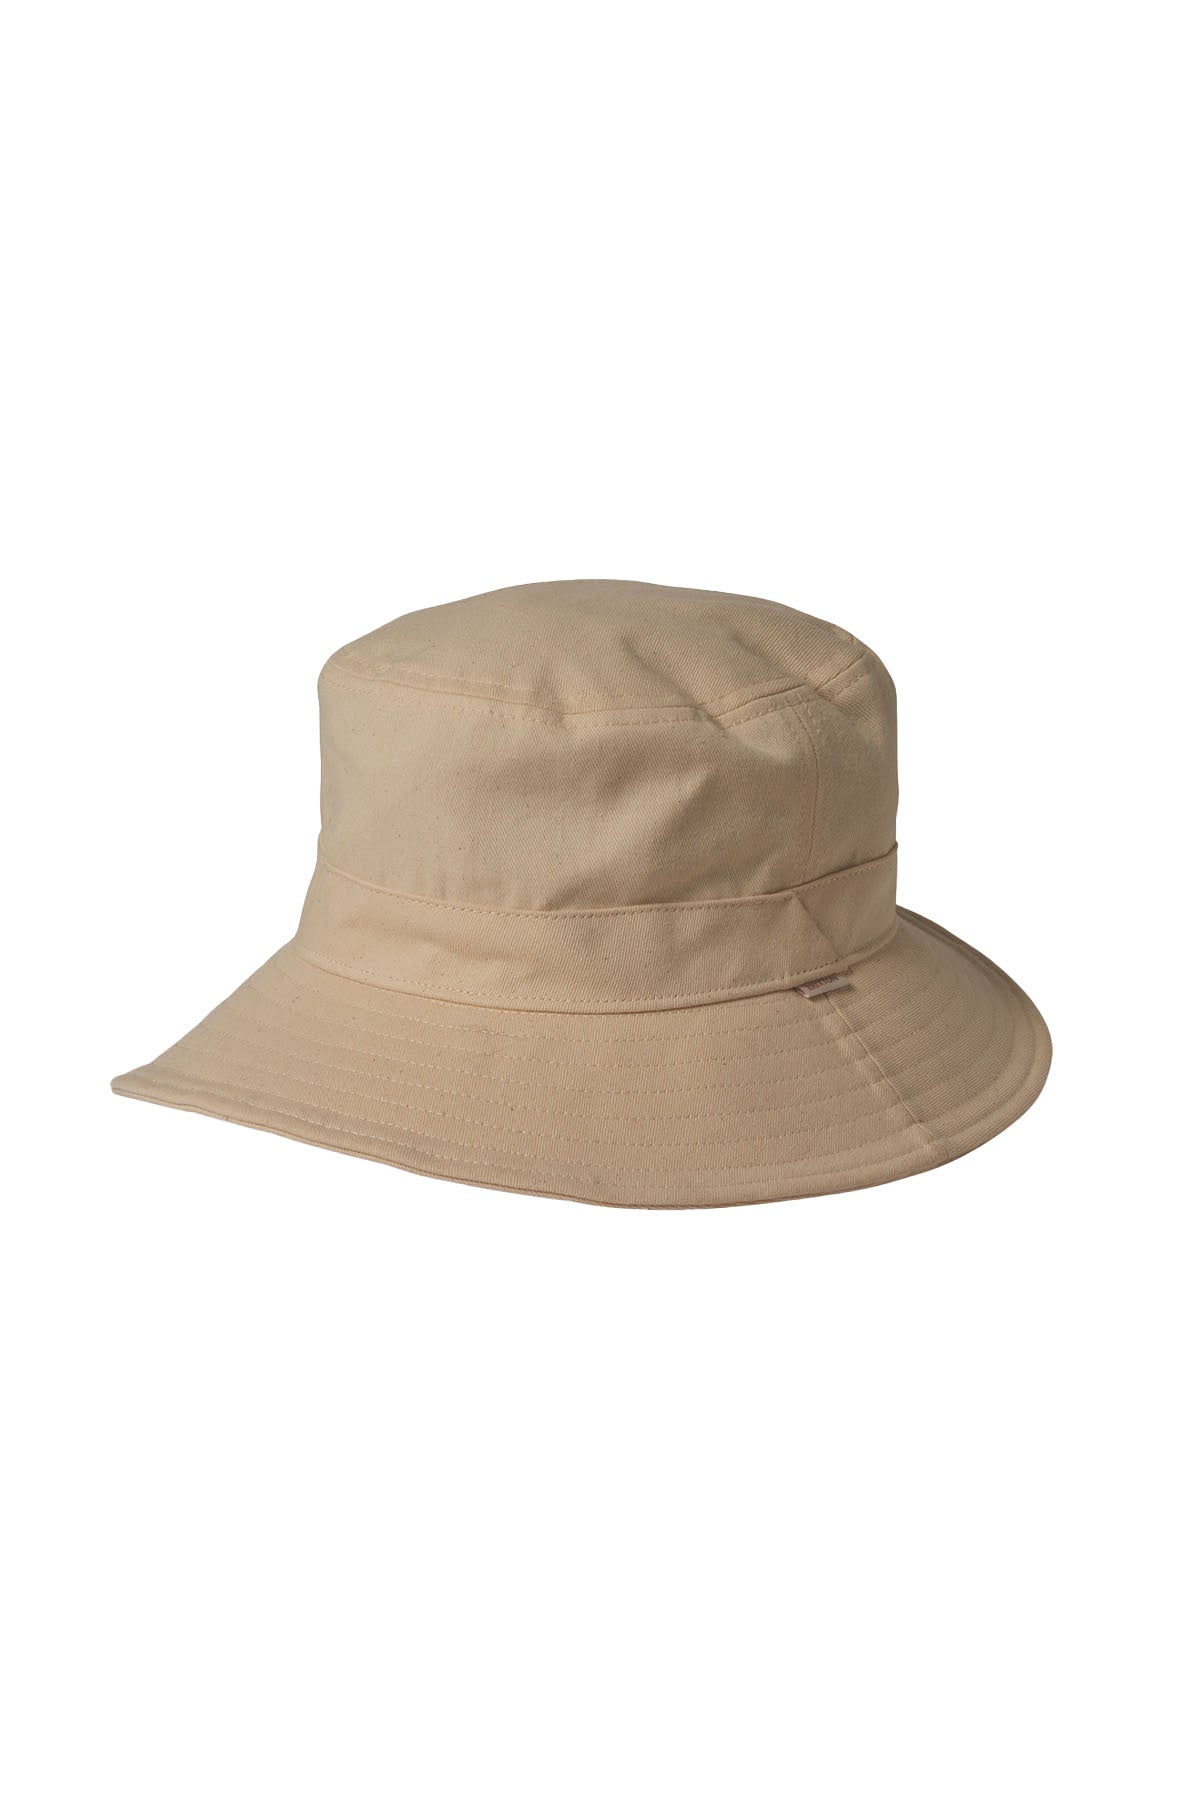 Brixton - Petra Packable Bucket Hat - Natural - Profile